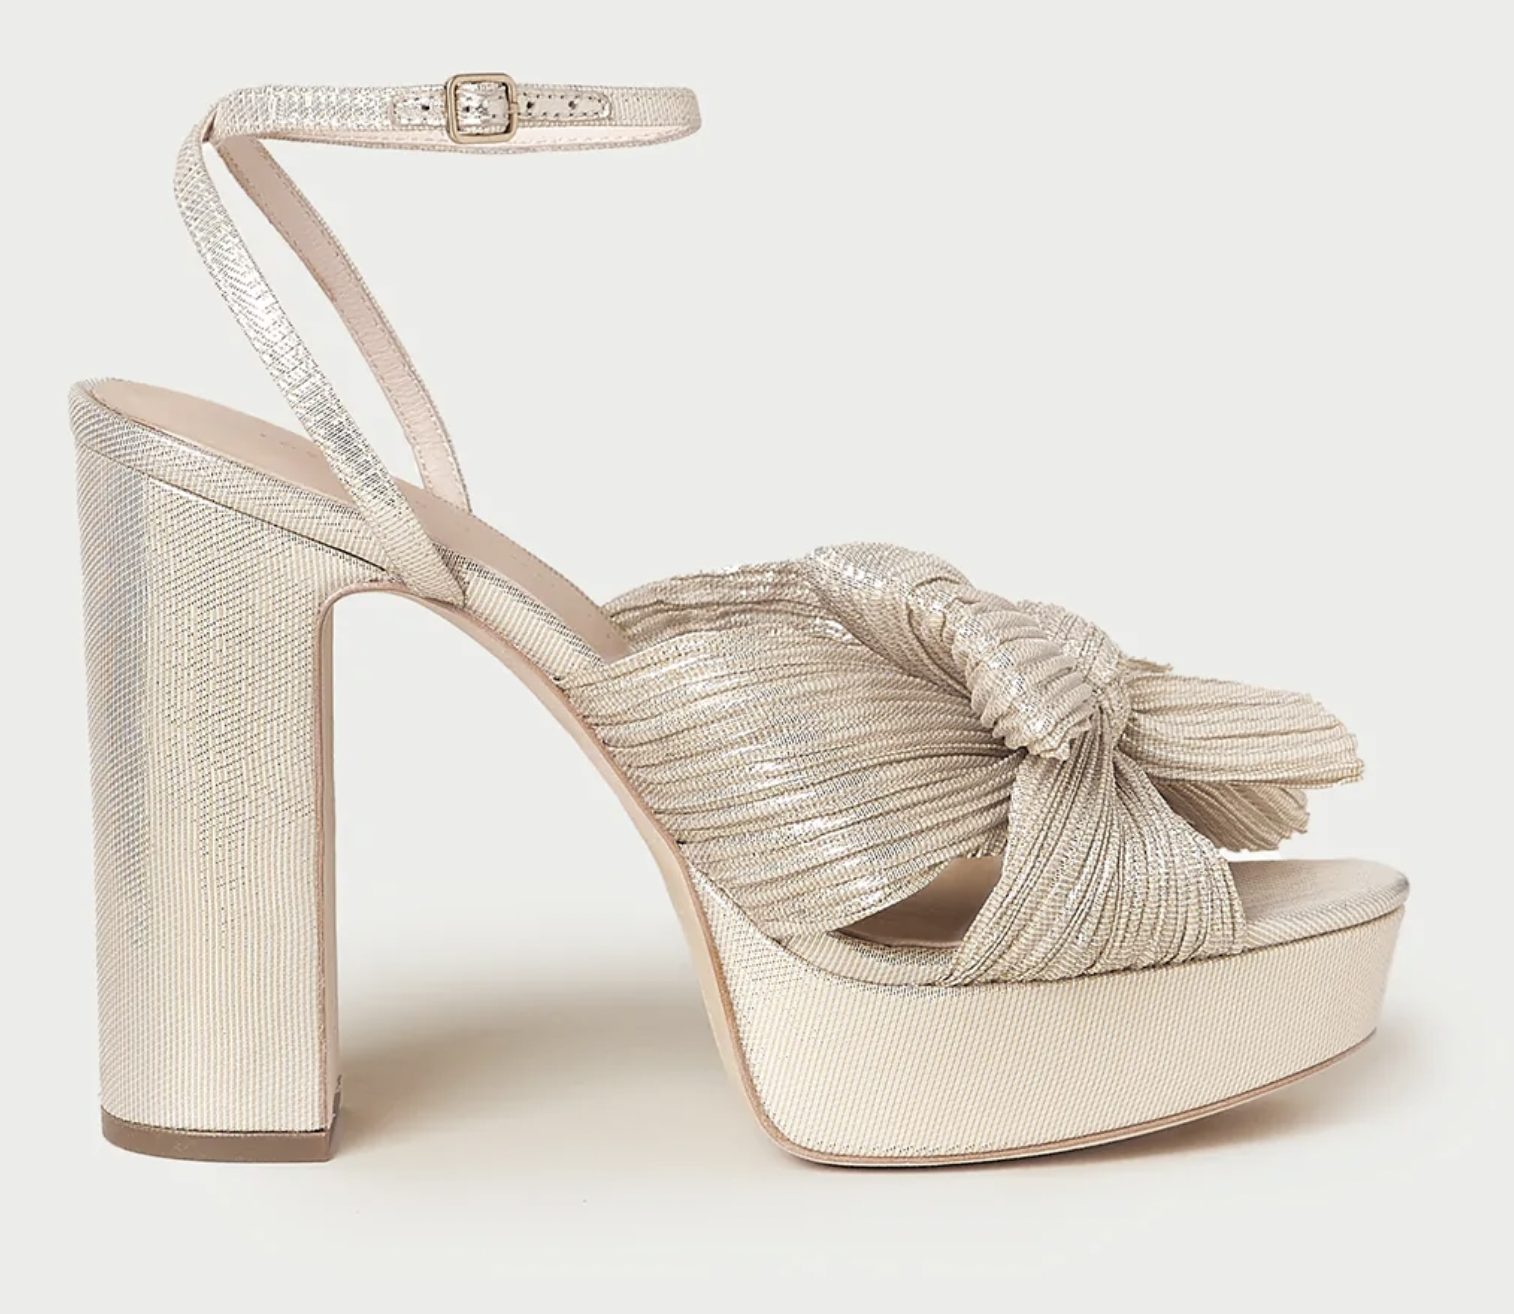 Platinum Natalia Shoes by Loeffler Randall - T H E W H I T E & G O L D